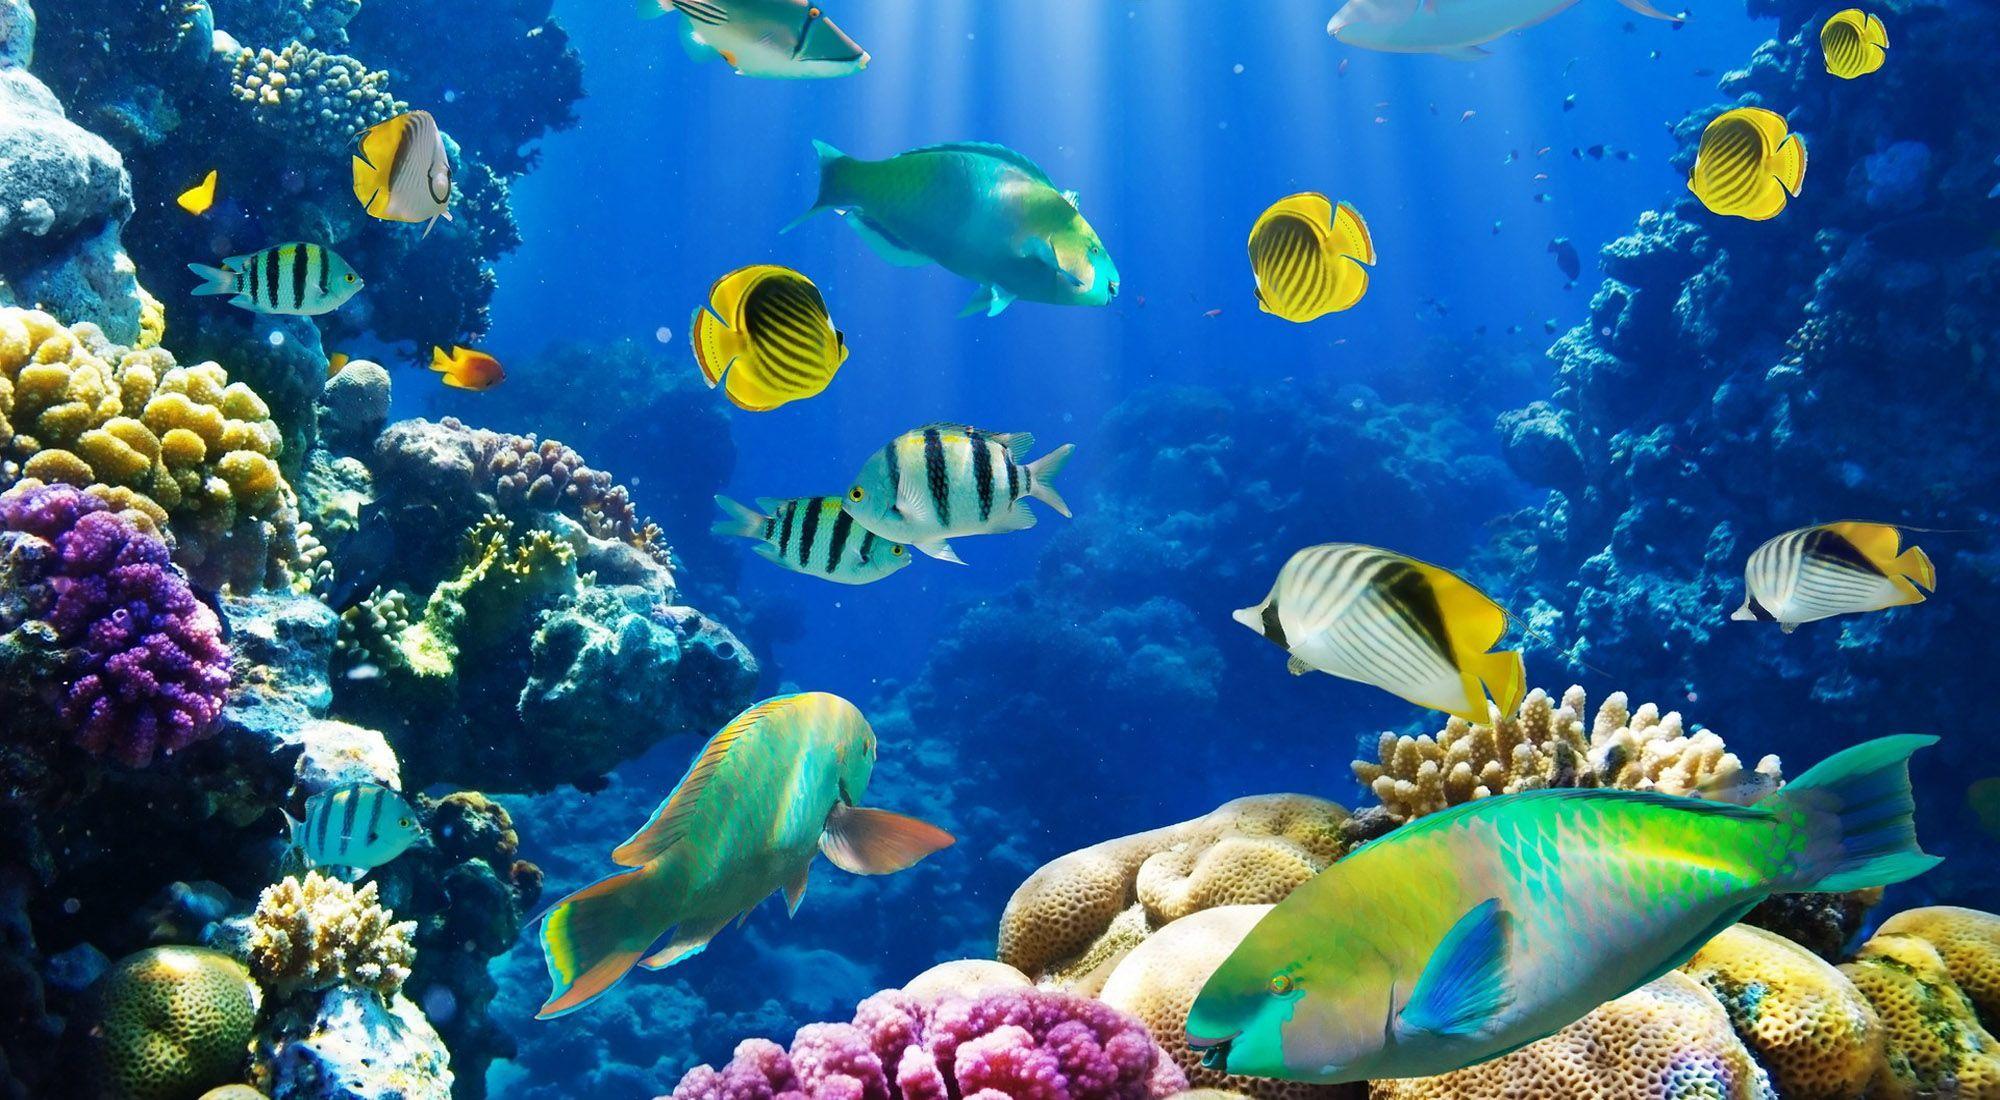 Fish HD Wallpaper. Underwater wallpaper, Sea life wallpaper, Fish wallpaper